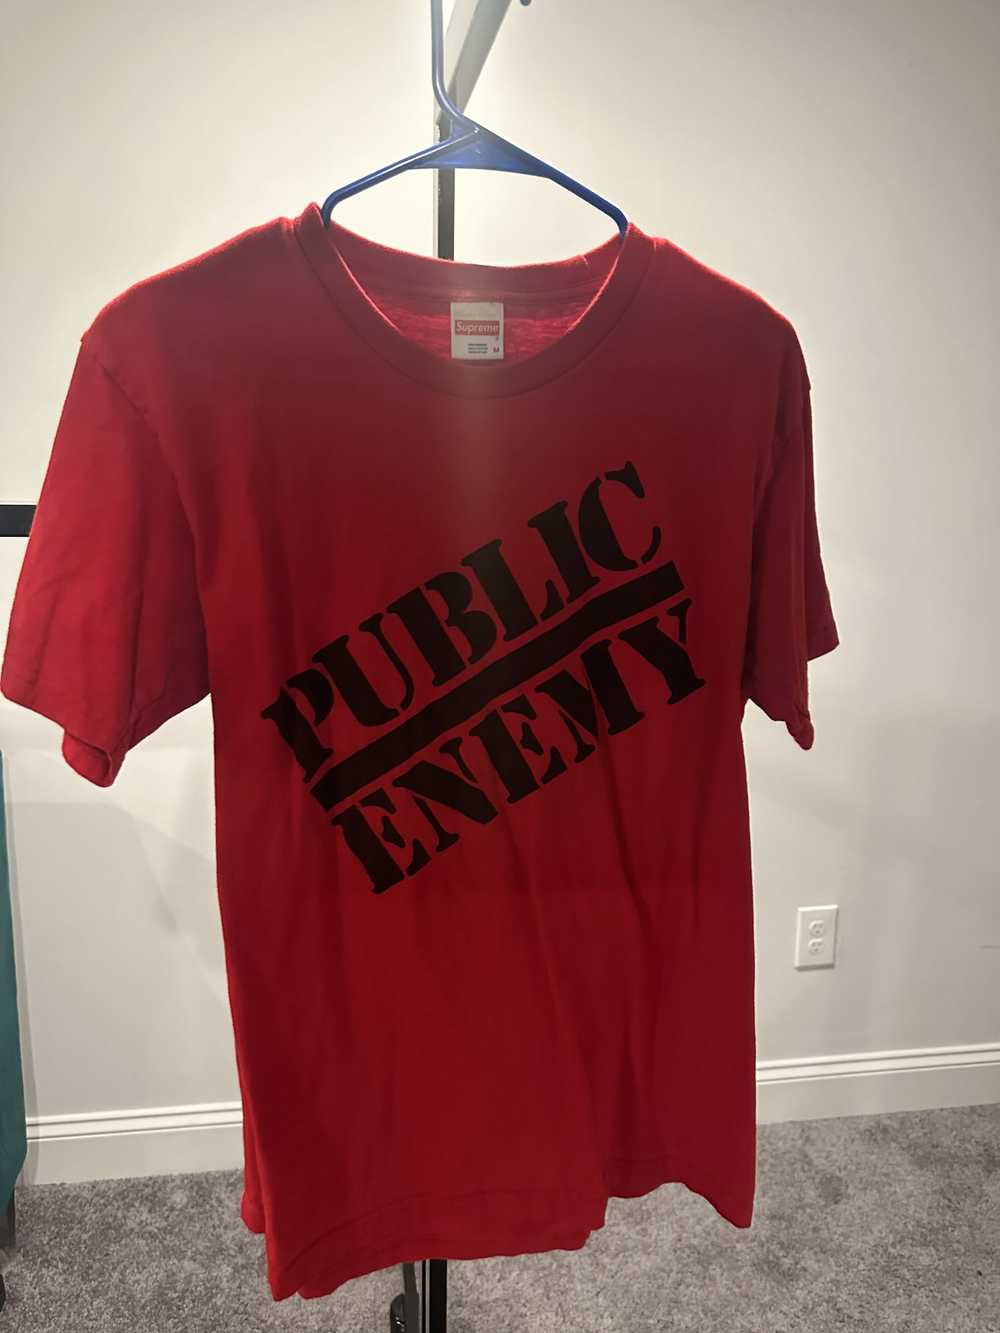 Public Enemy × Supreme Supreme x Public Enemy Tee - image 1